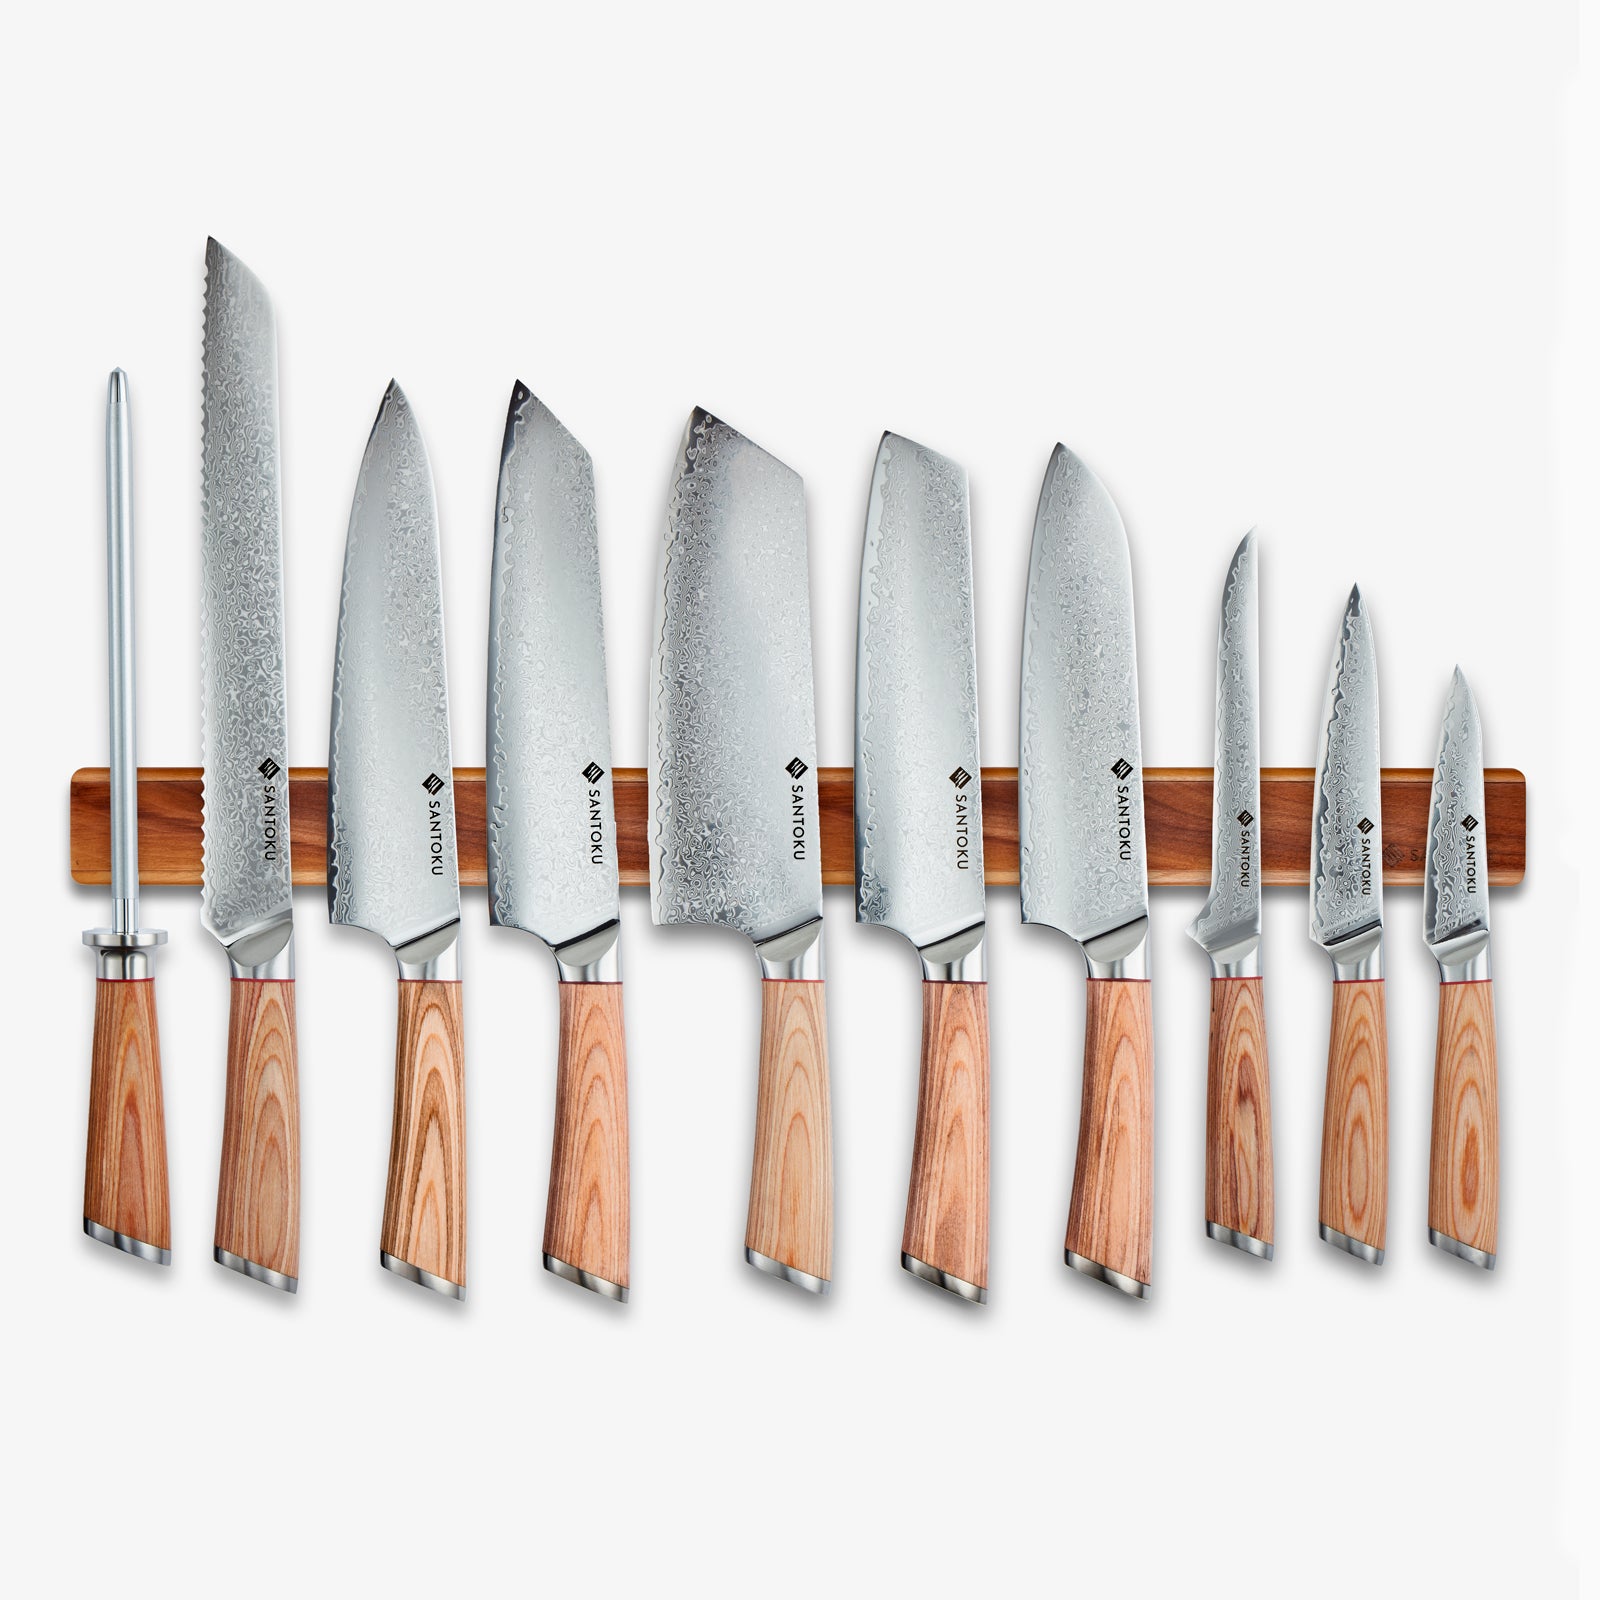 Haruta (はる た た) 67 слой AUS 10 Damascus Steel Kitchen Knives